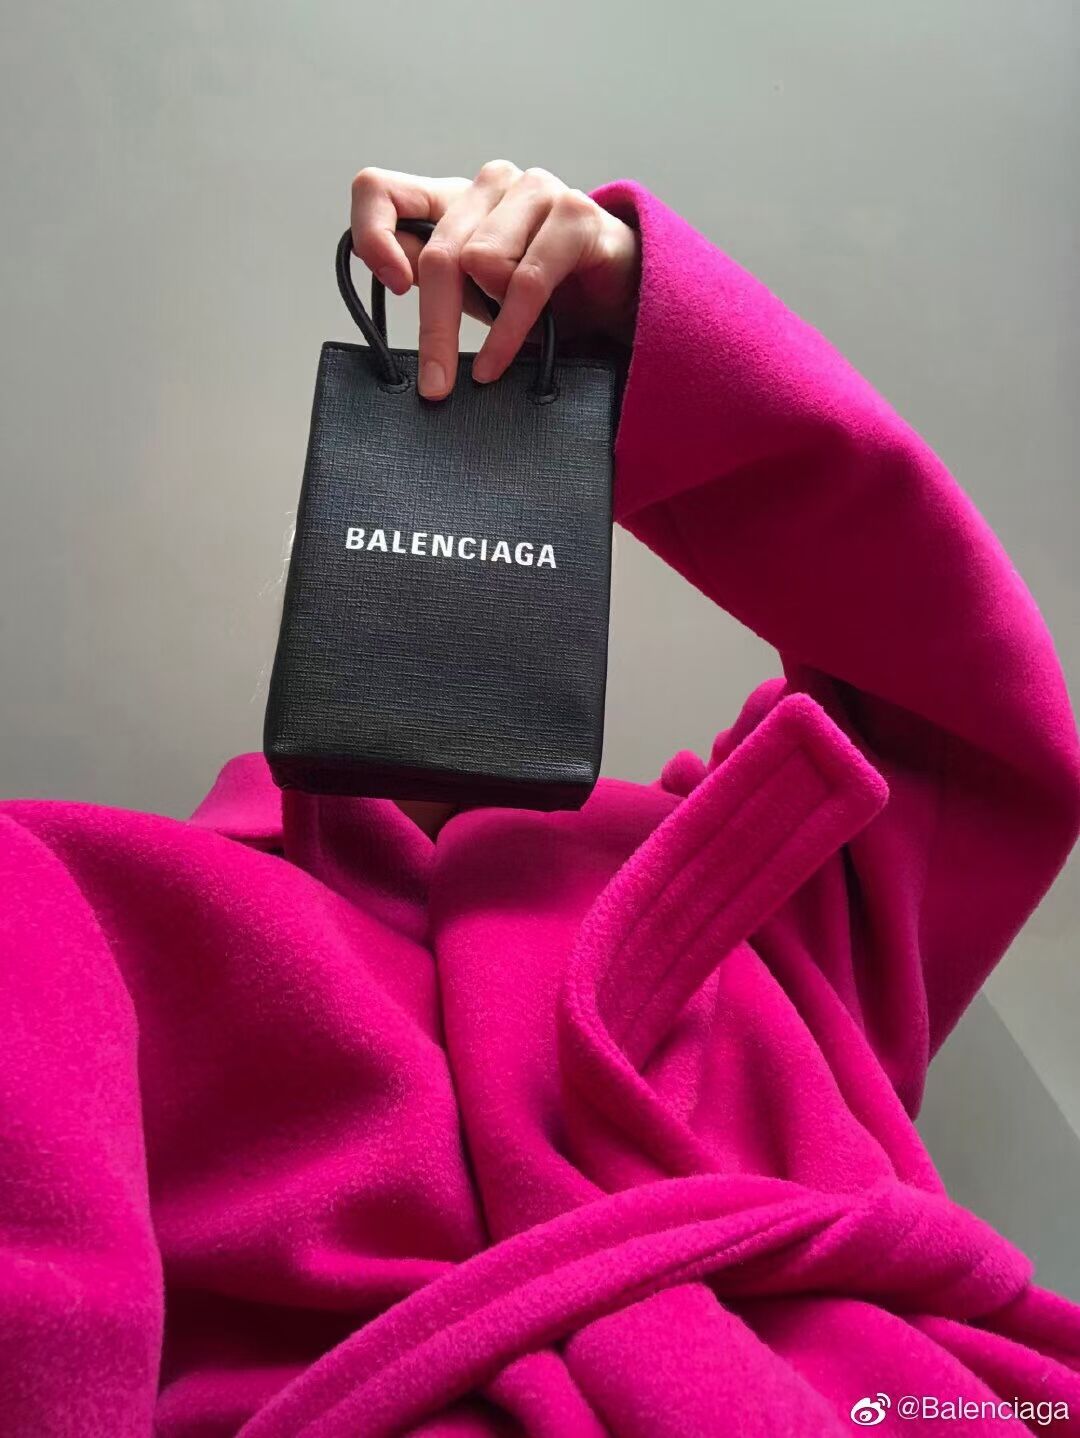 Balenciaga Original Leather Mini Shopper Bag B152865 black